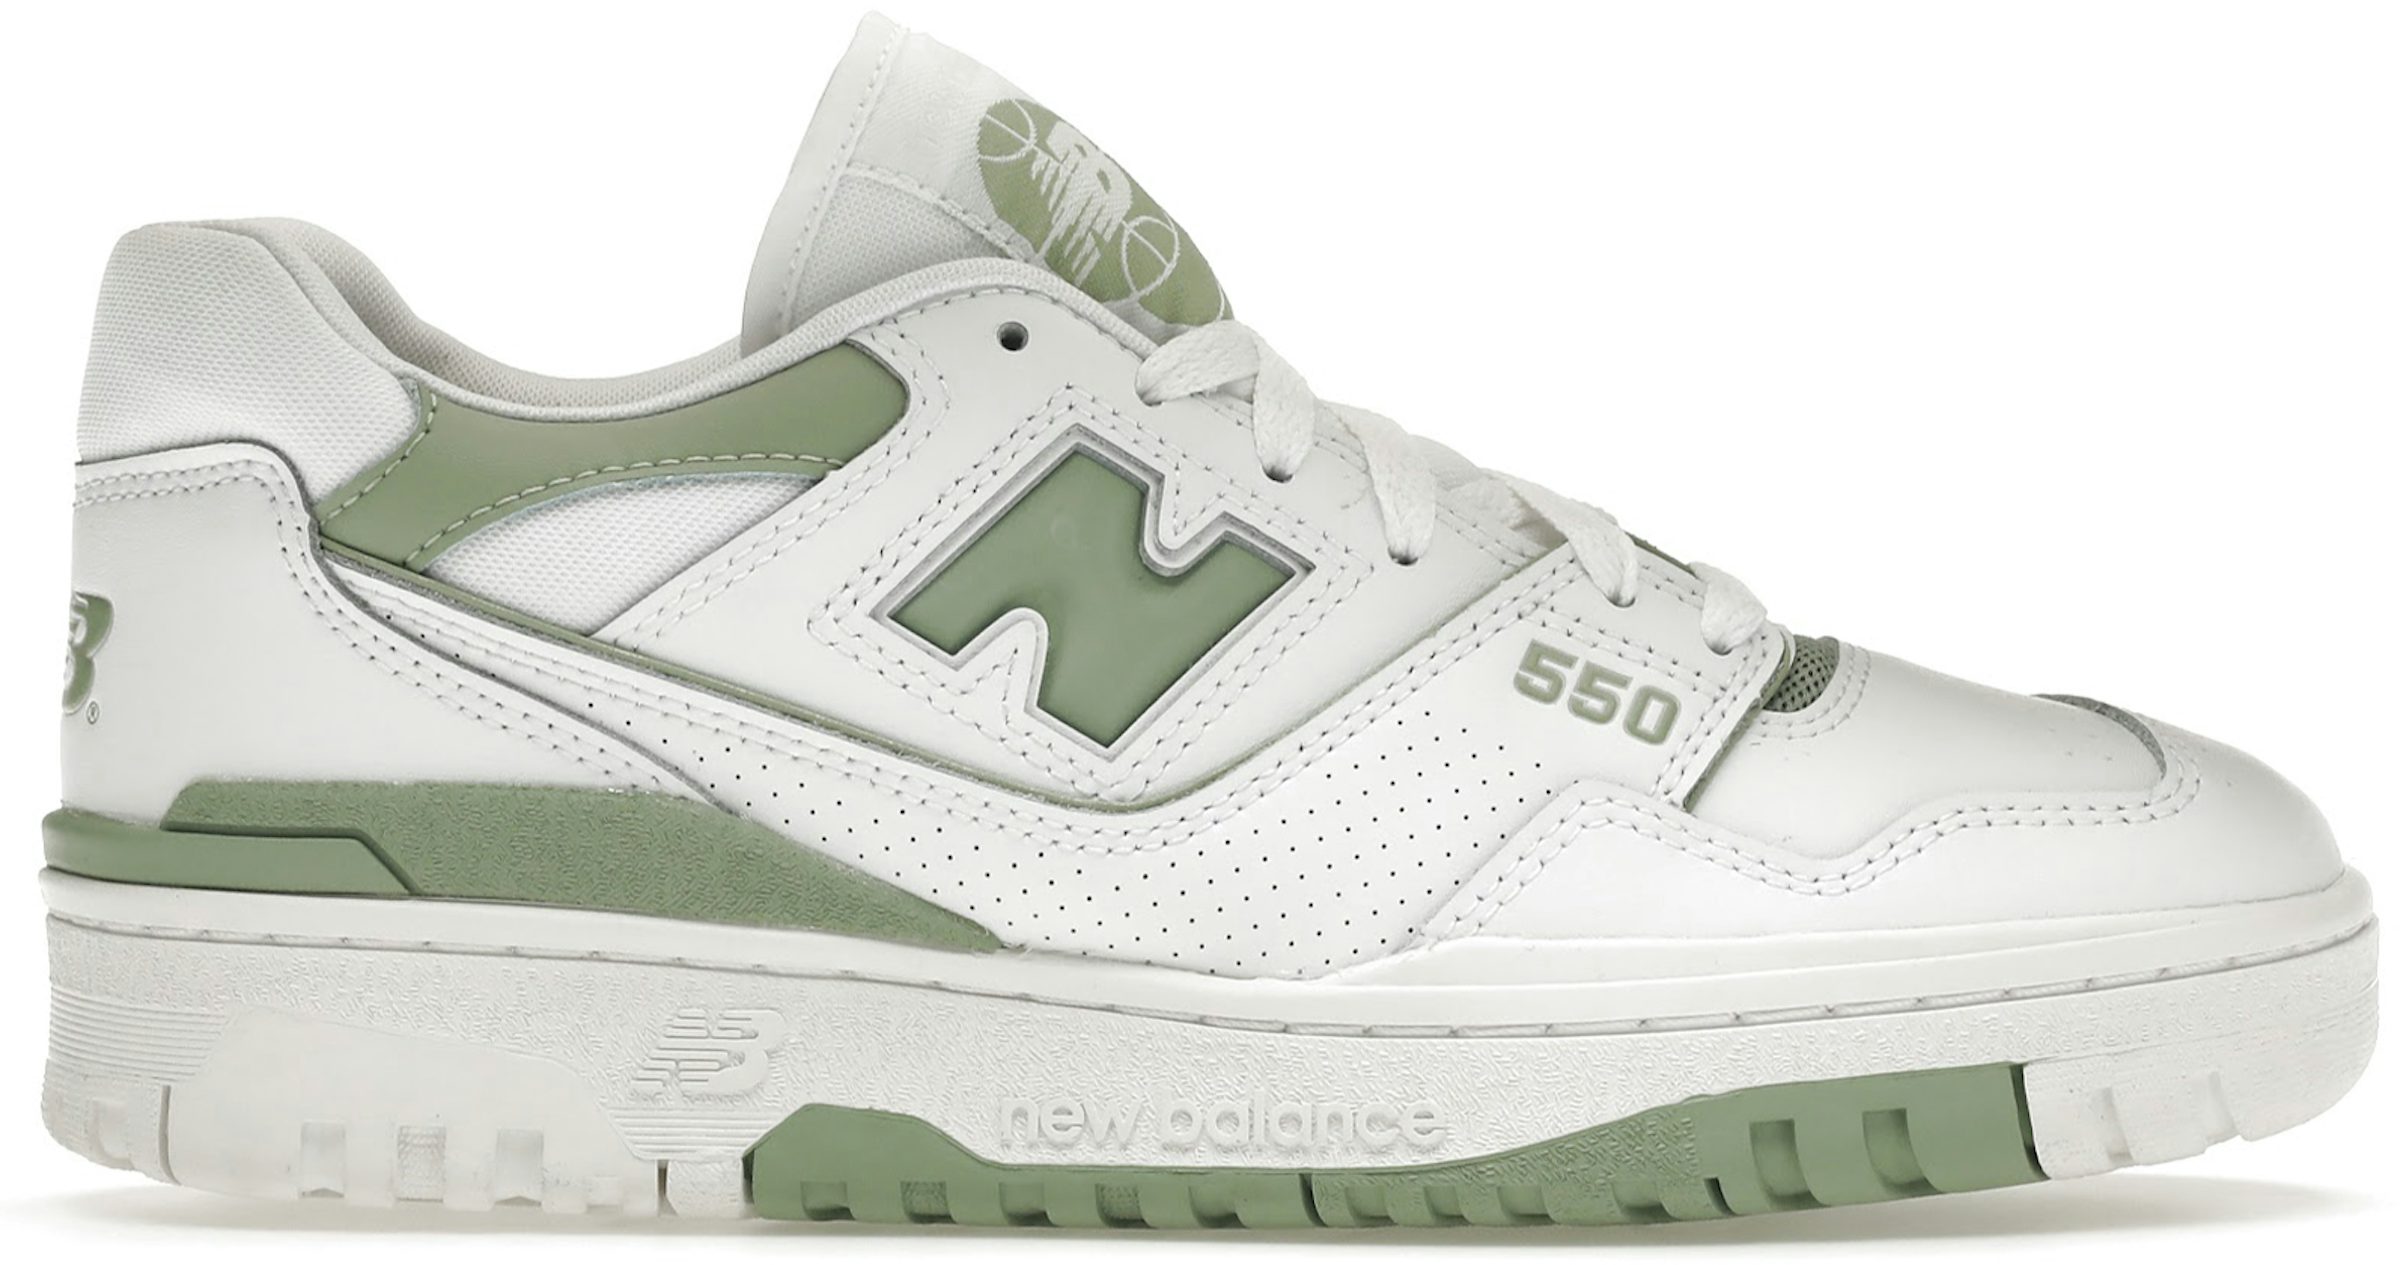 New Balance 550 (White/Green) 13